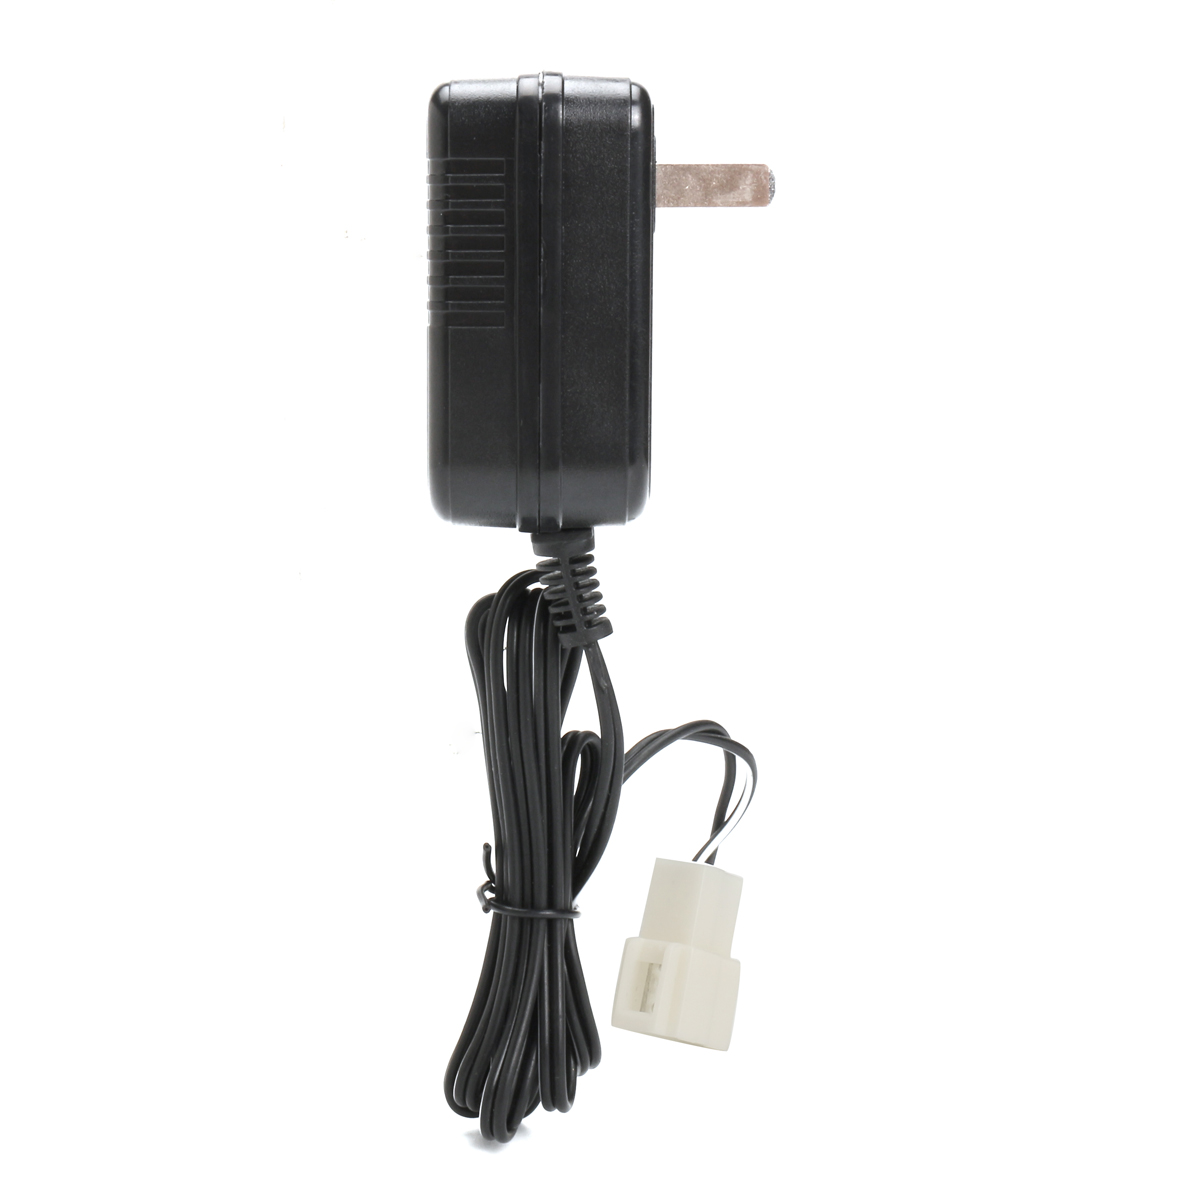 6V AC Charger Adaptor Power Supply US Plug for Avigo Kid Toy Car Battery 500MA